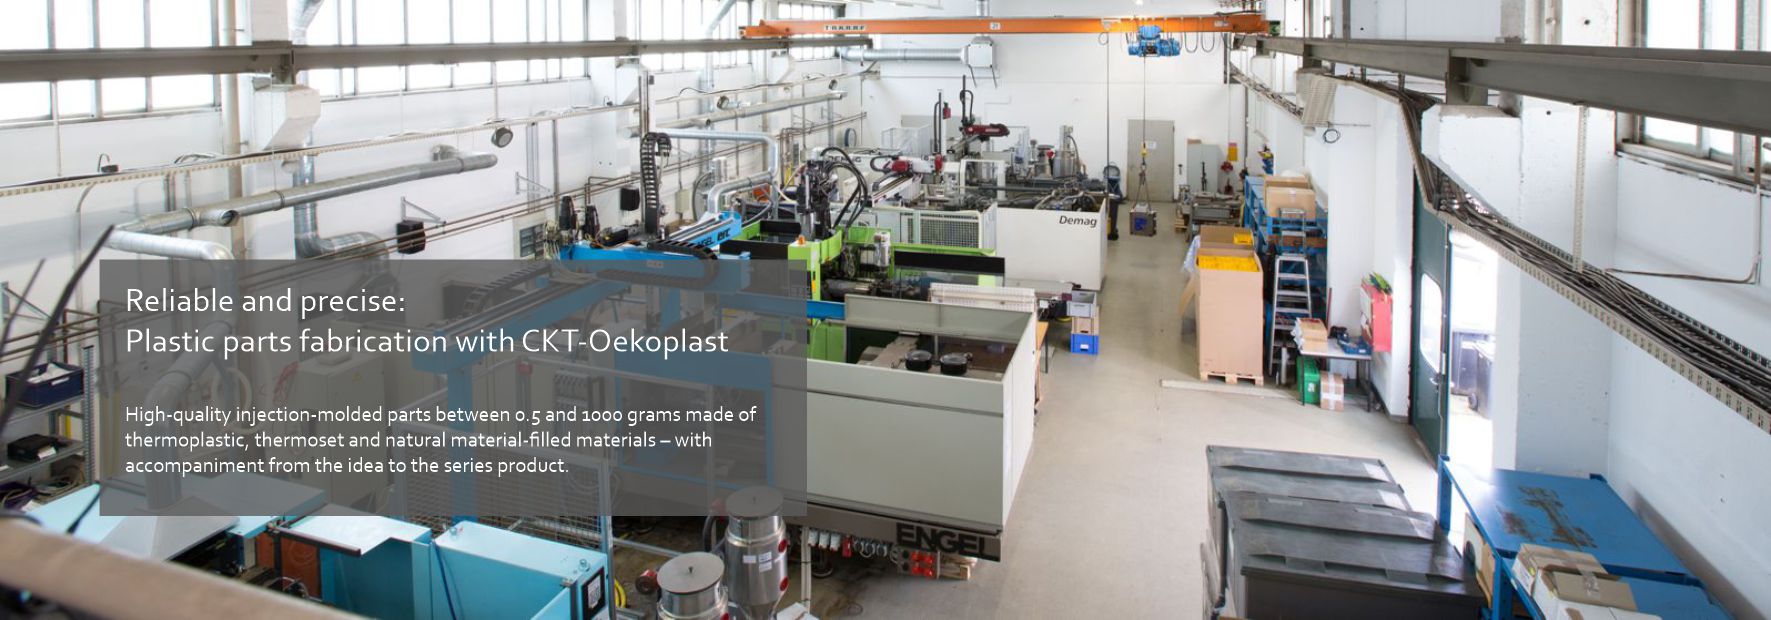 Manufacturing at CKT-Oekoplast